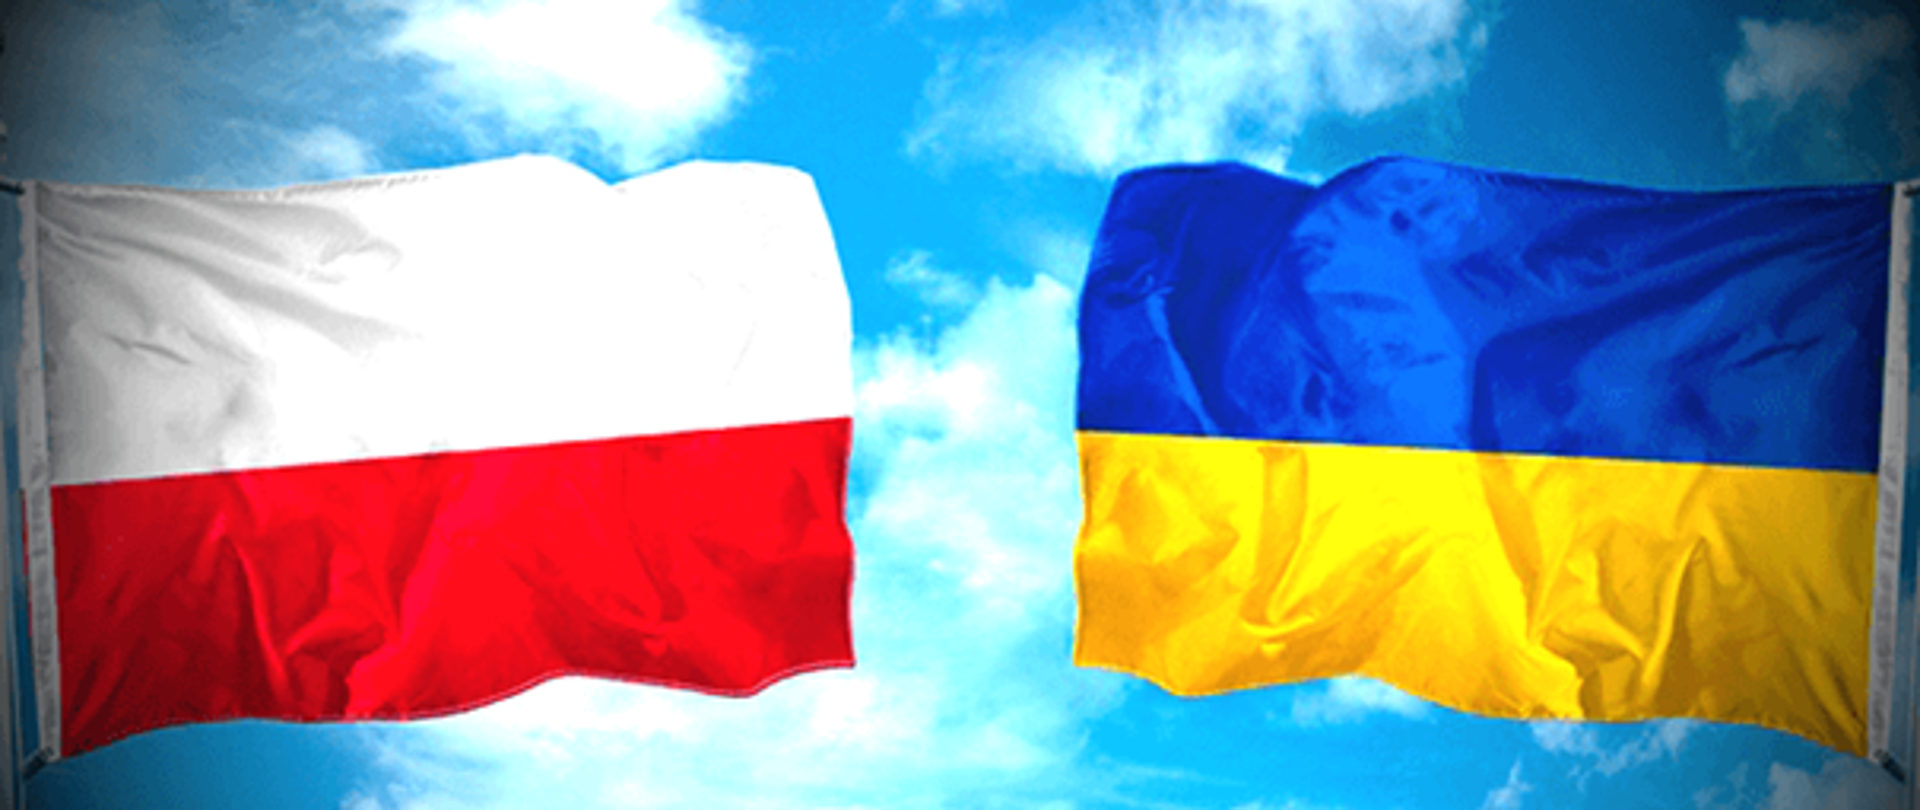 na tle nieba flagi Polski oraz Ukrainy